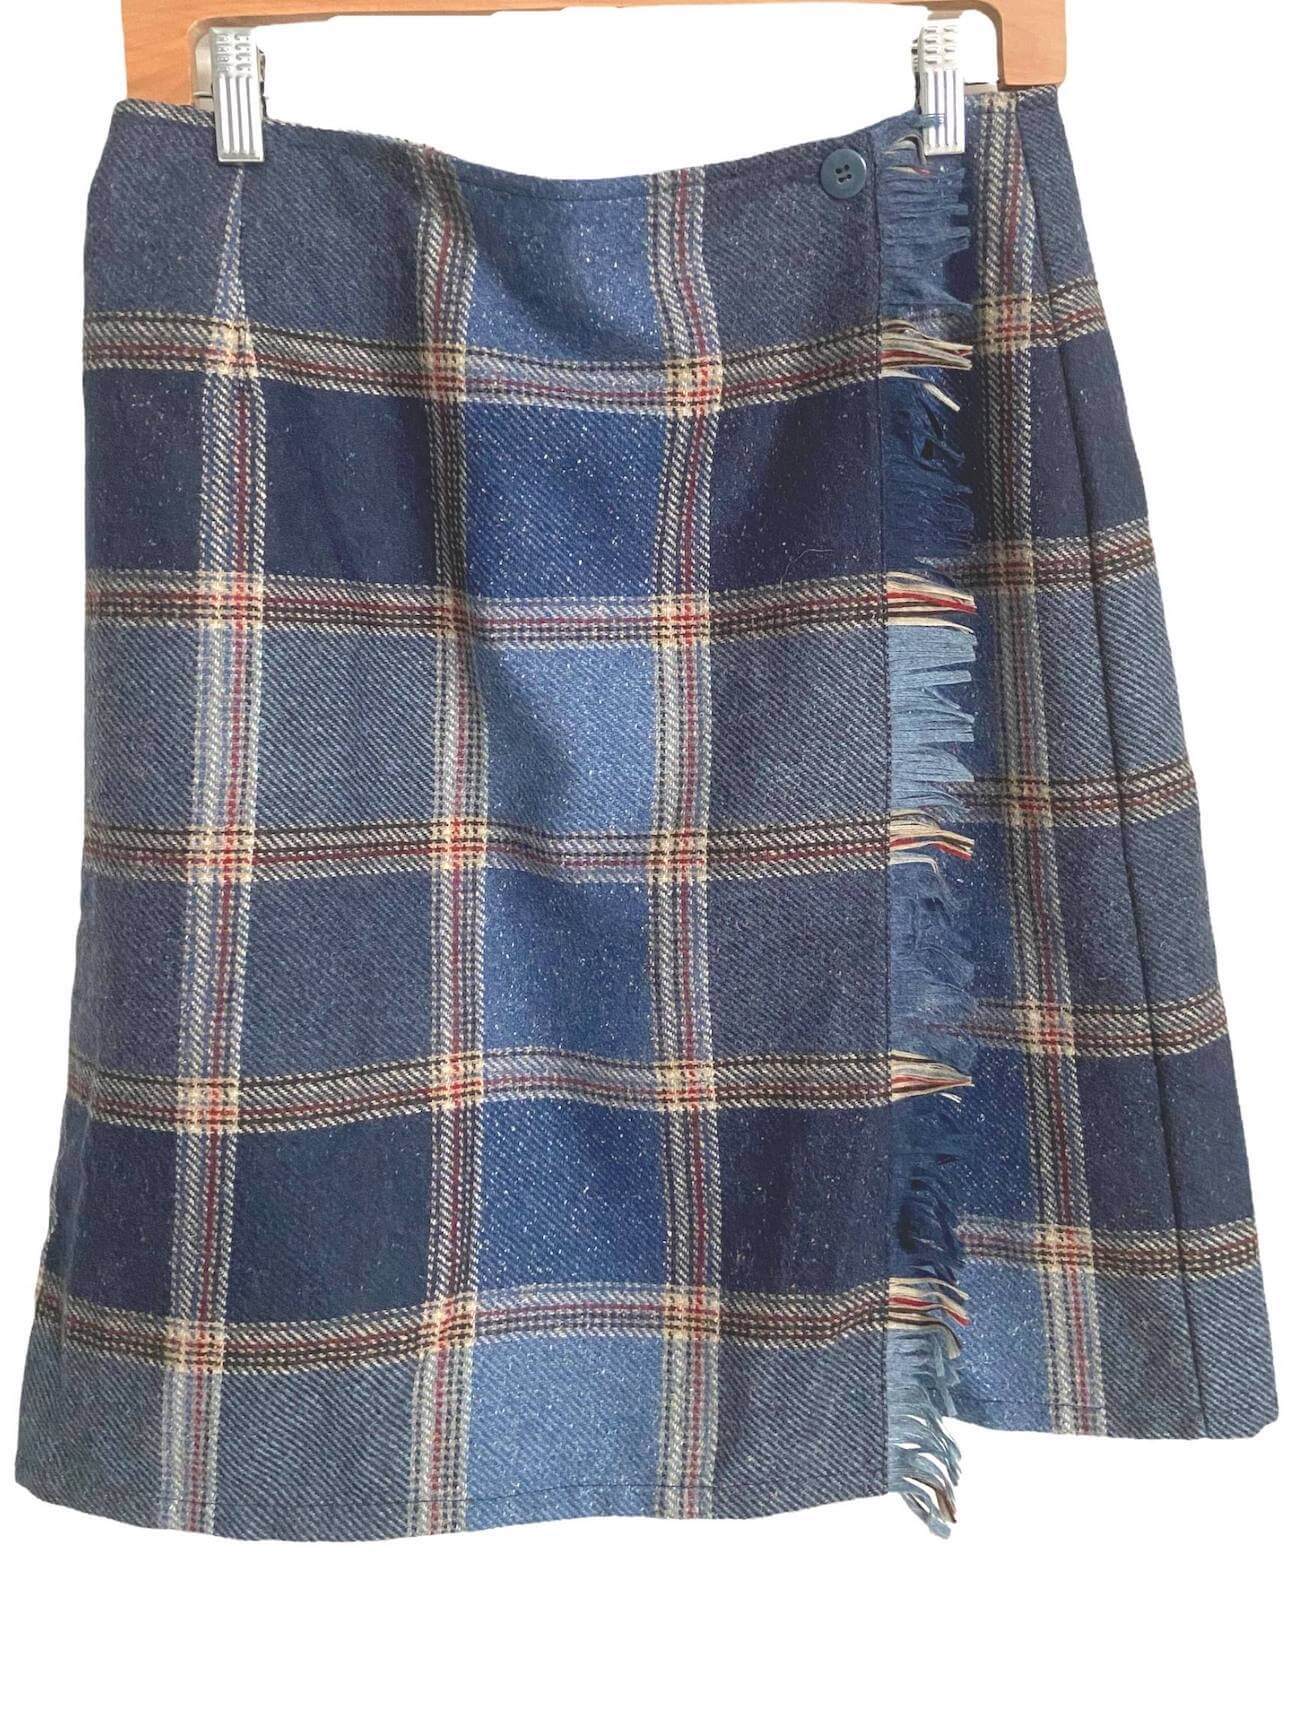 Long Wool Skirt in Autumn Plaid